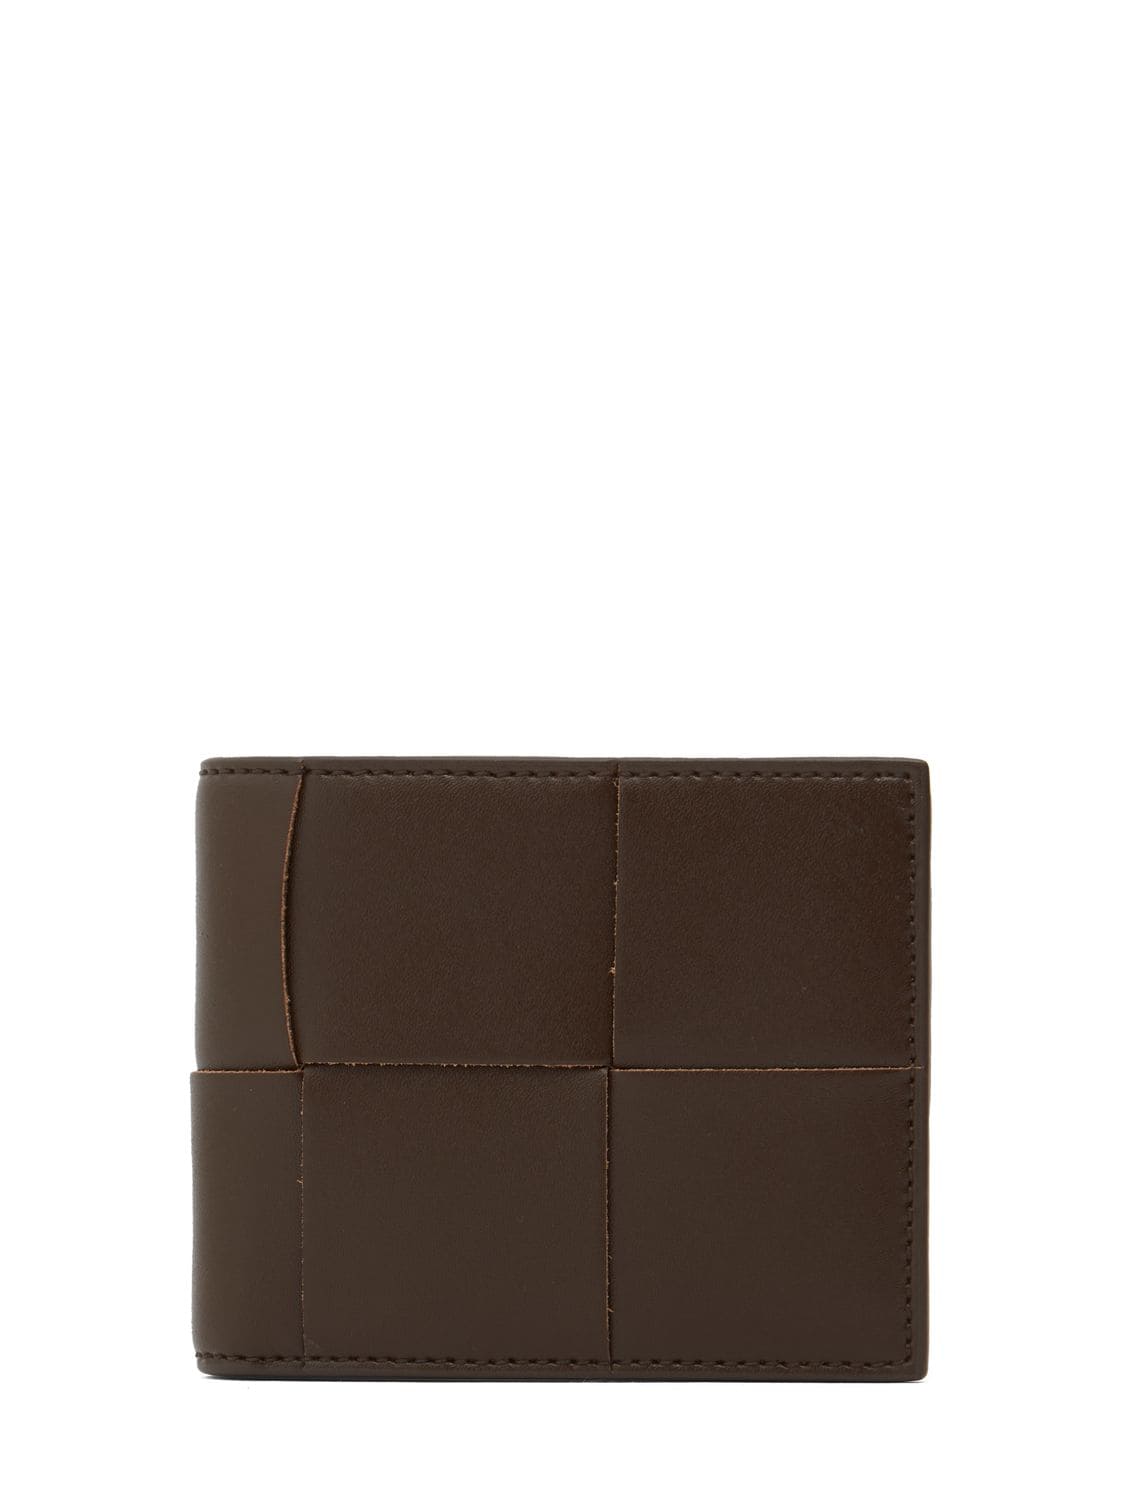 BOTTEGA VENETA Intrecciato leather wallet, Sale up to 70% off